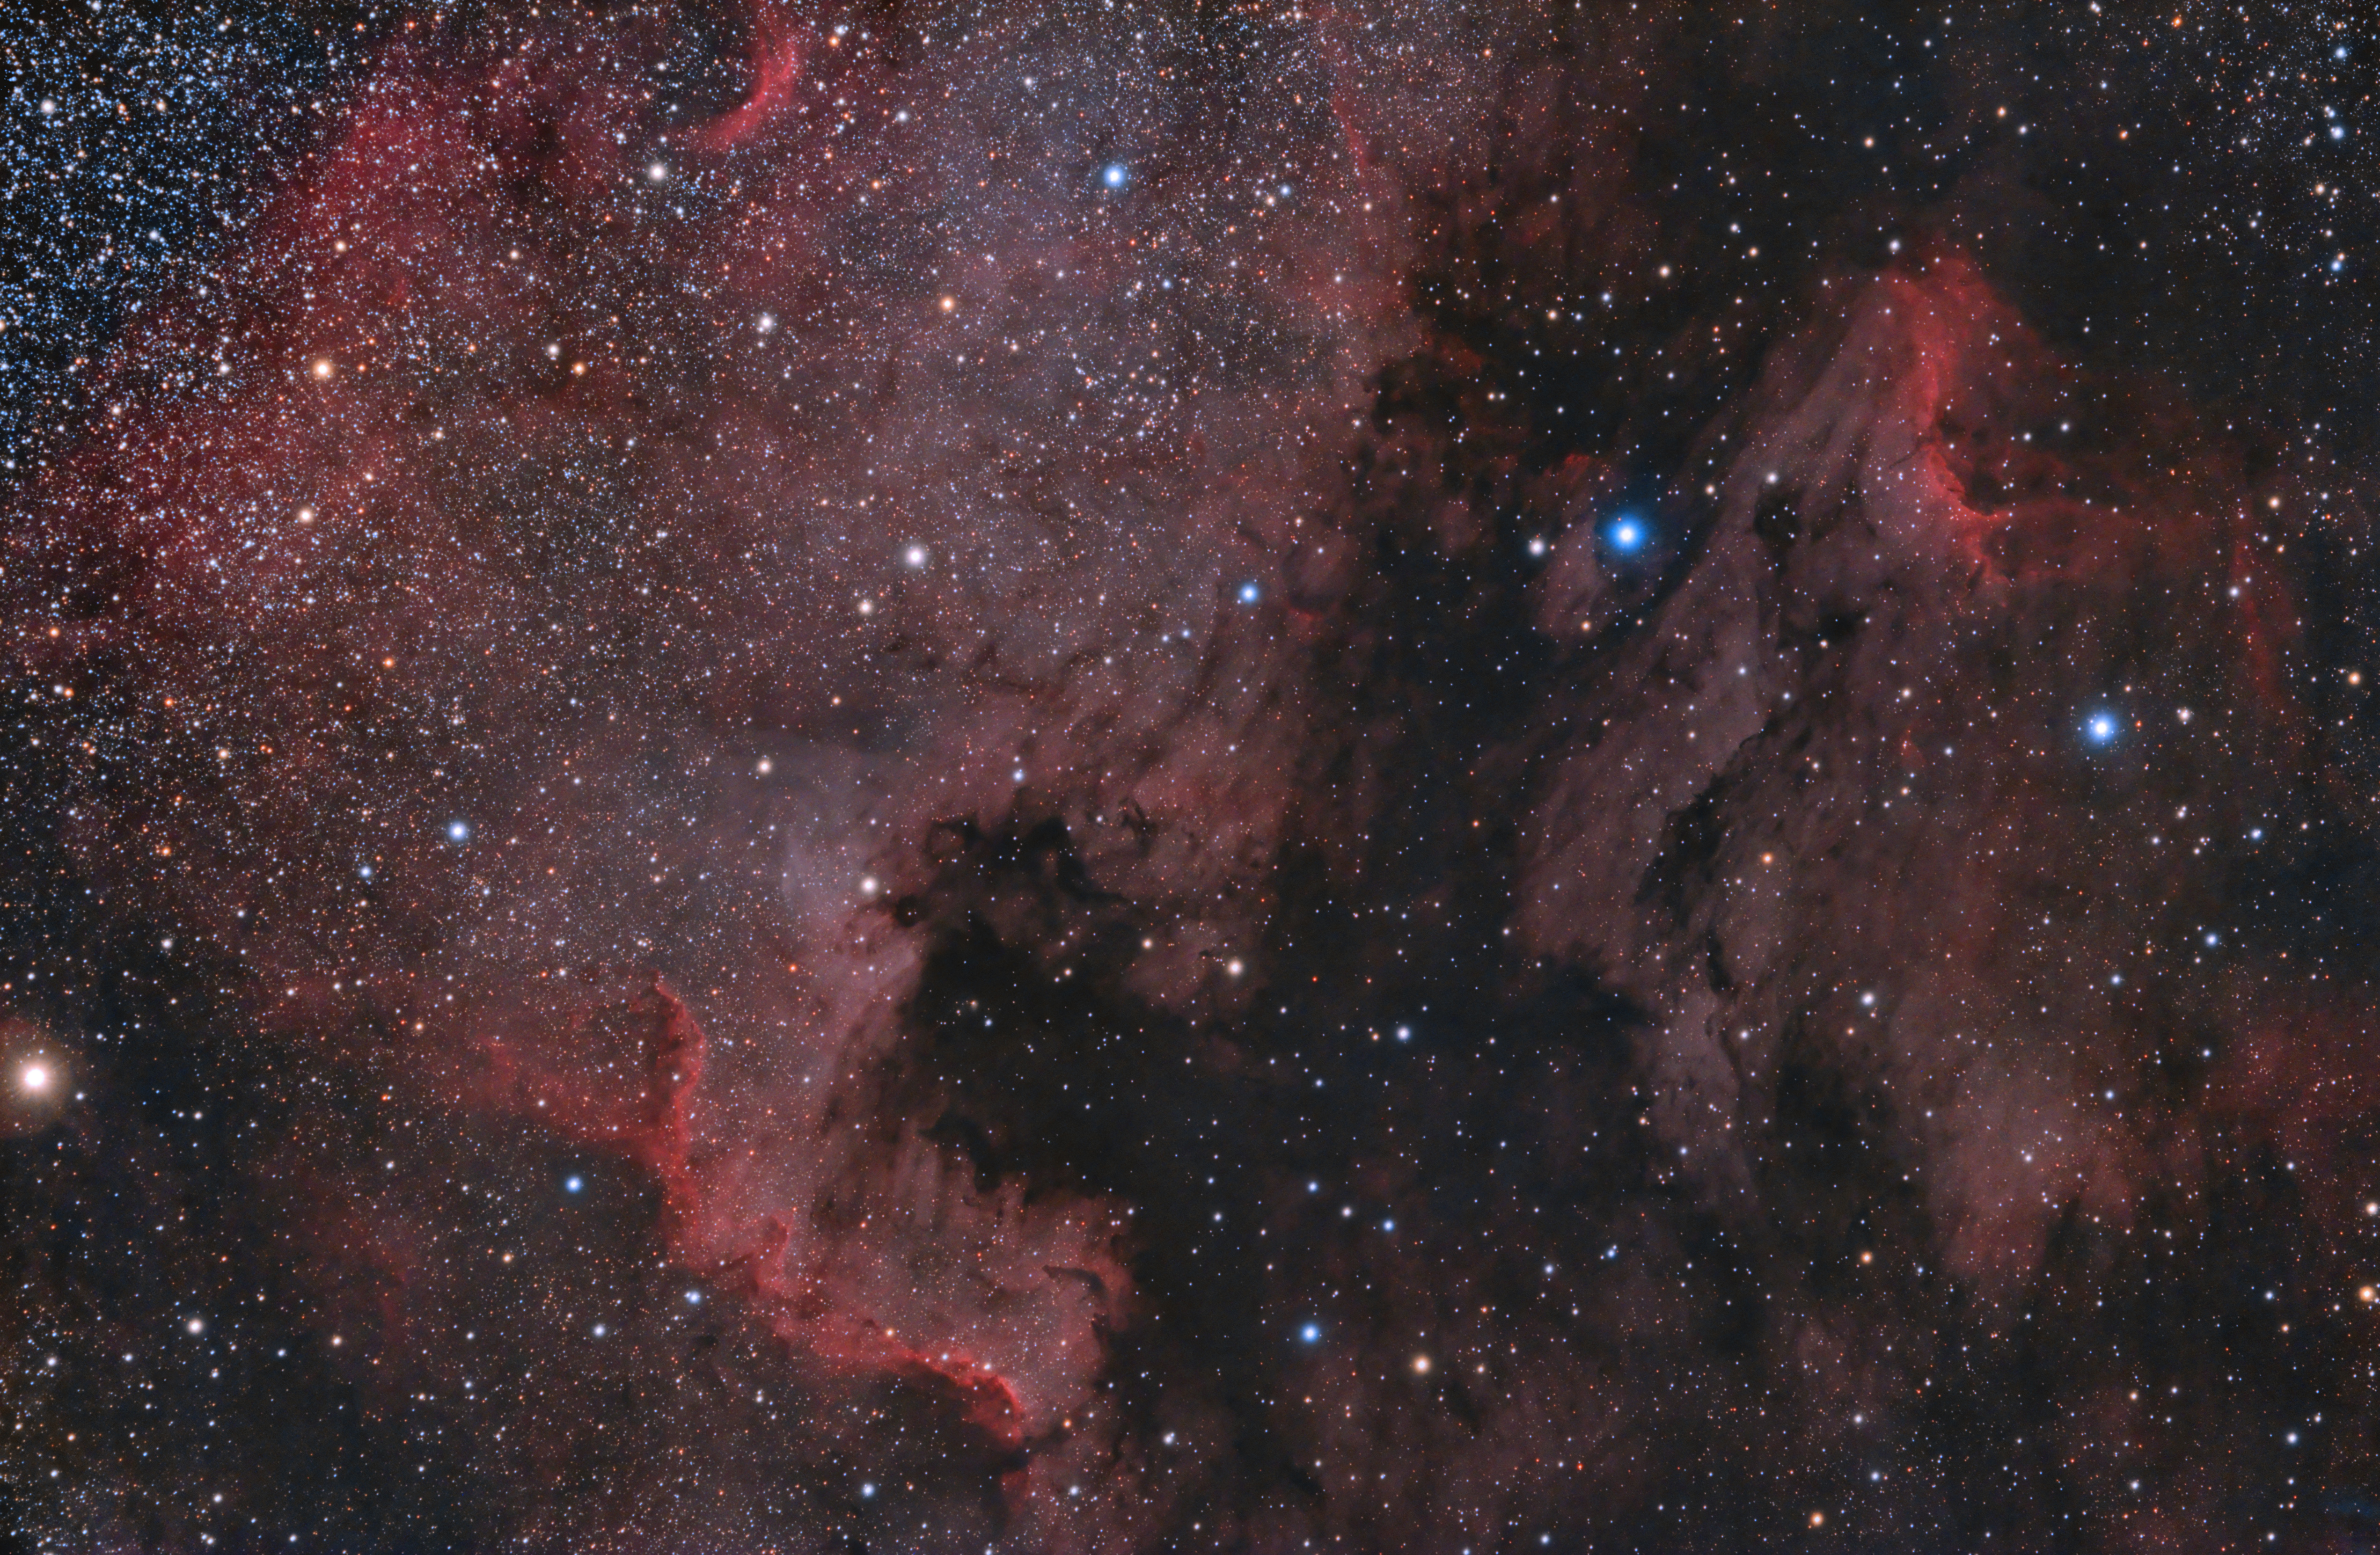 NGC 7000 North America Nebula, IC 5070 Pelican Nebula